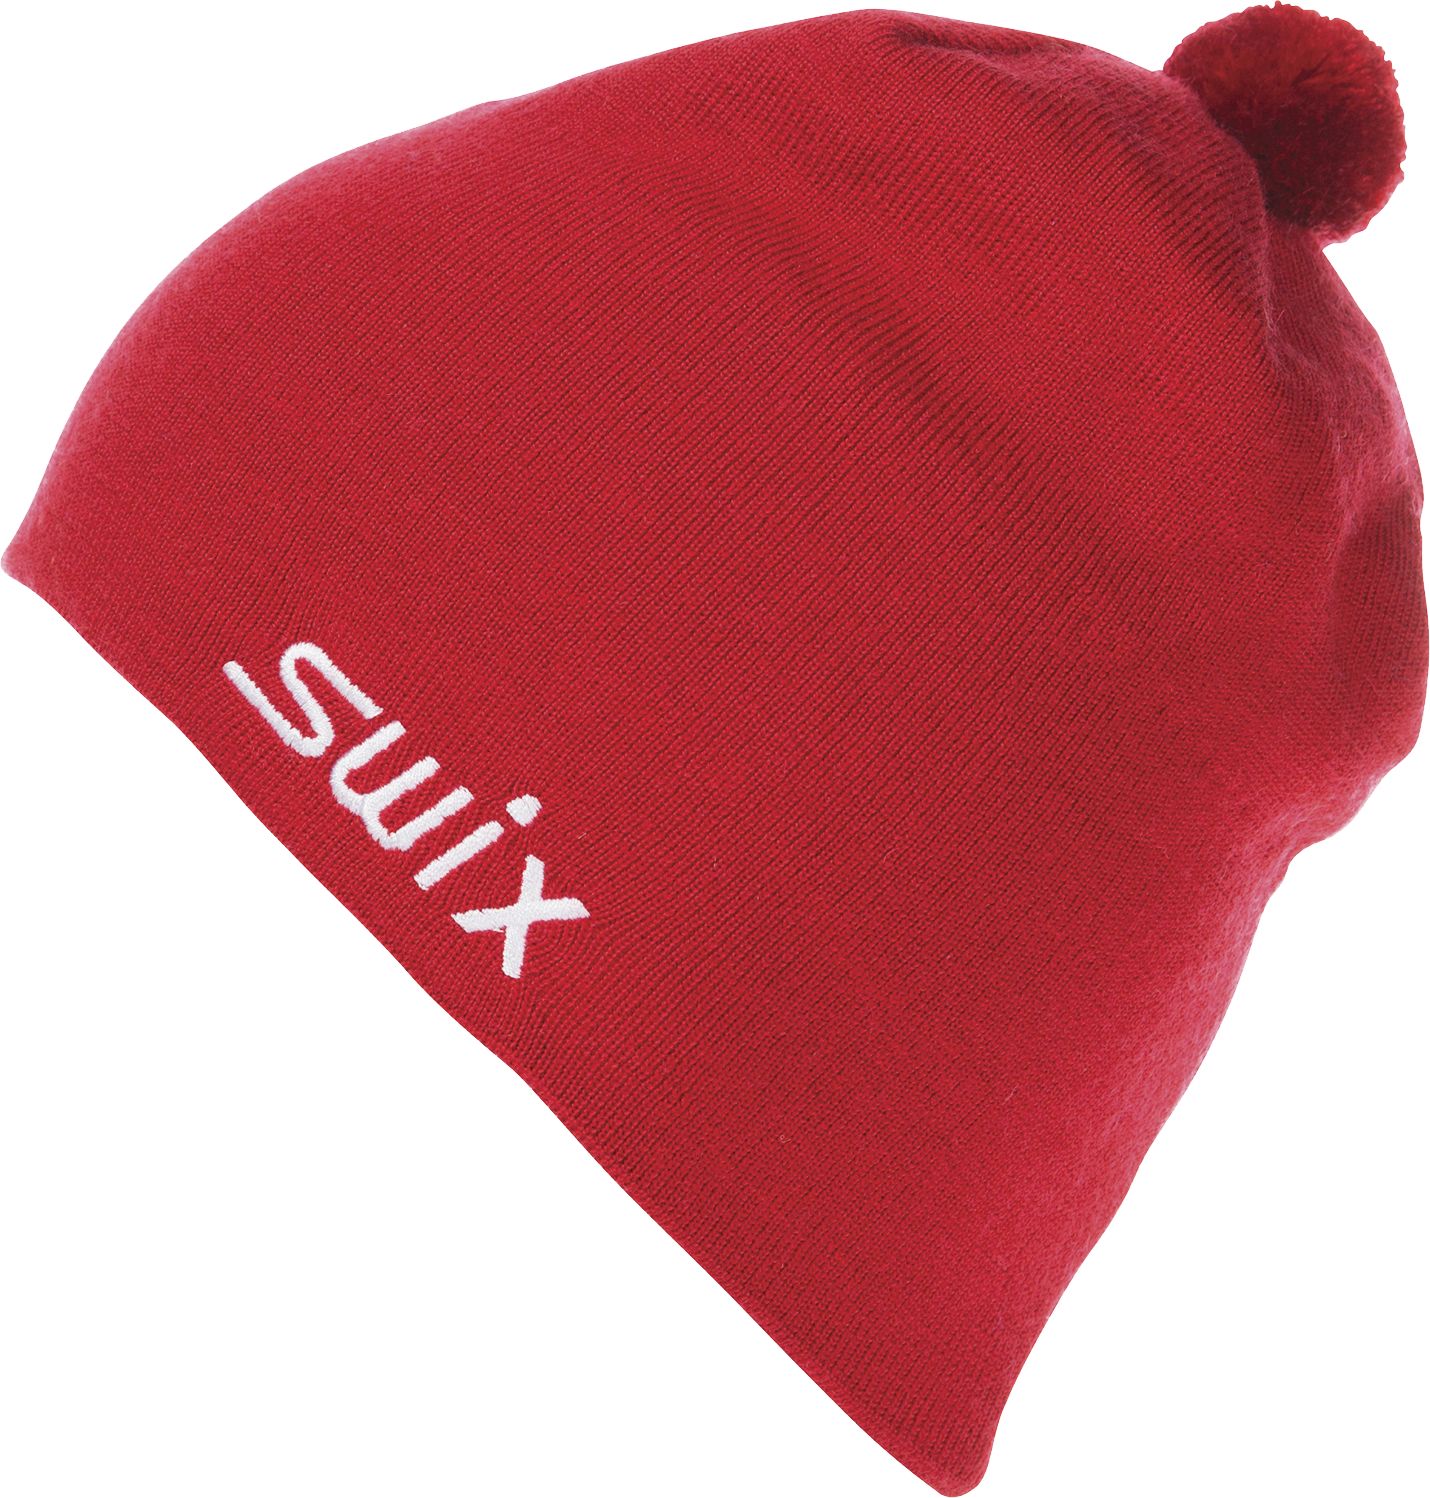 SWIX, Tradition hat